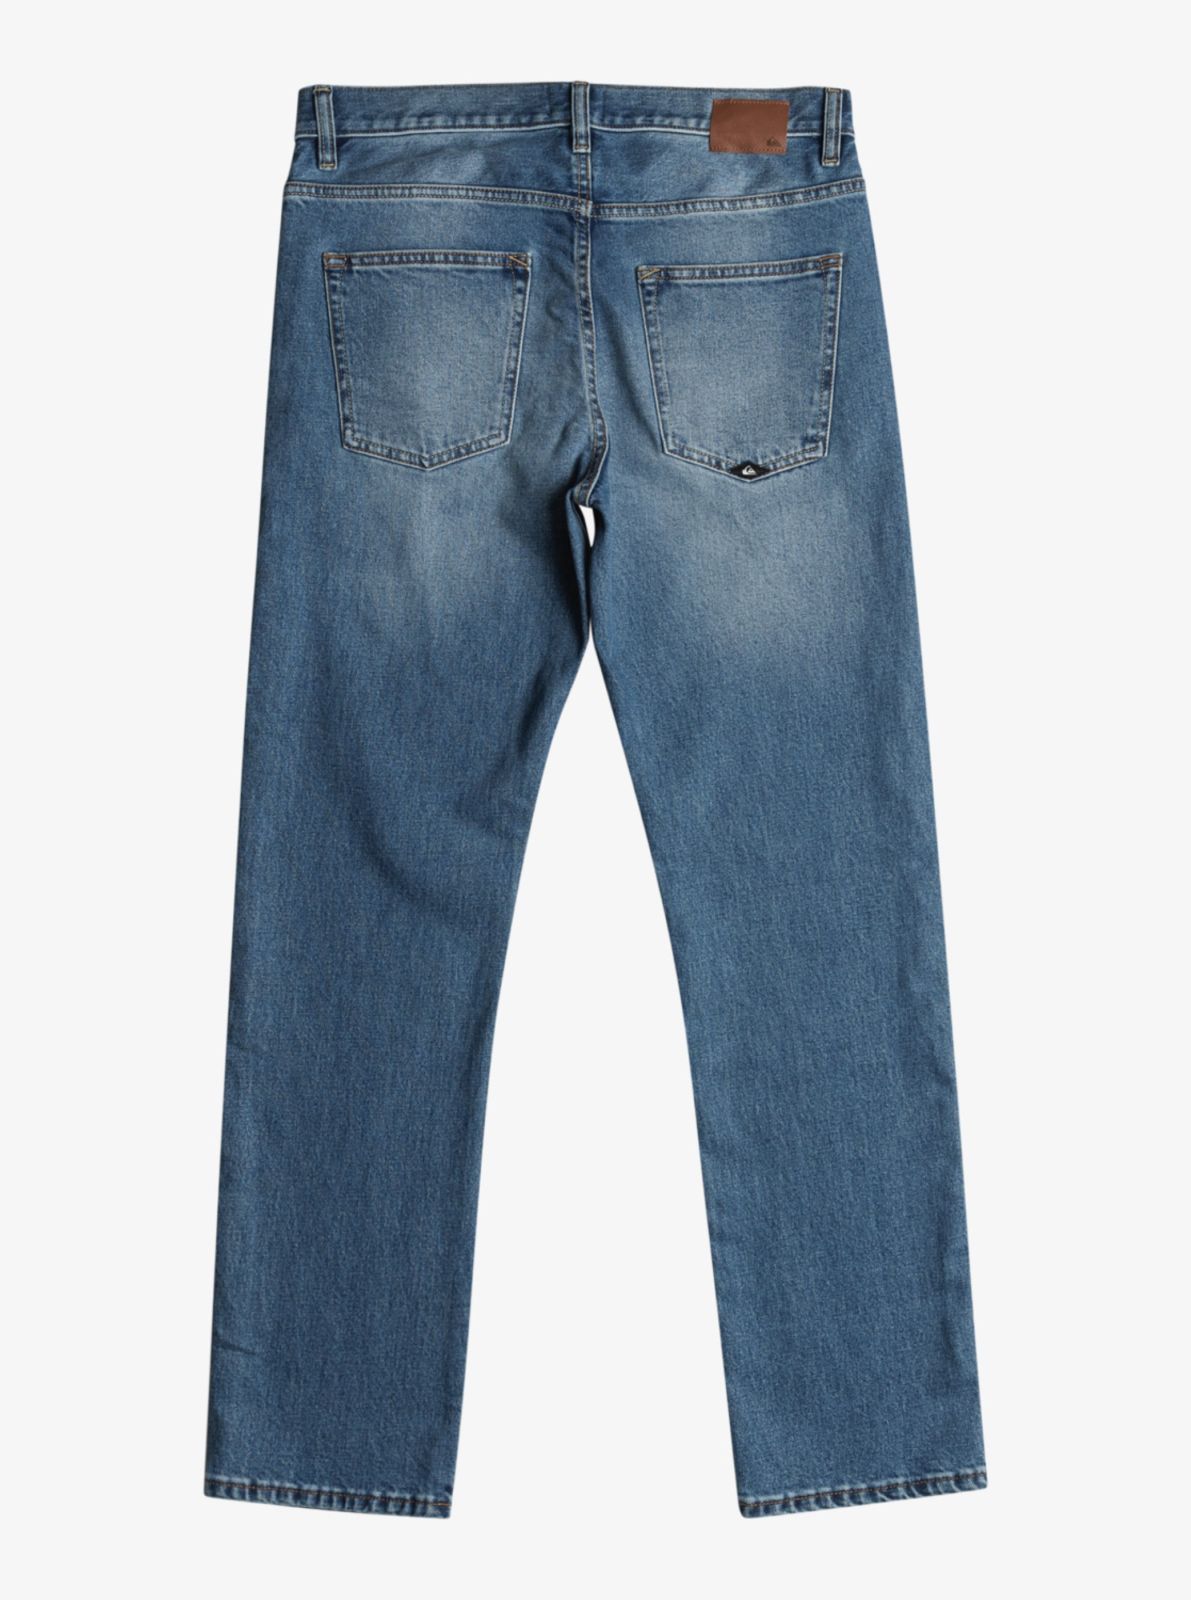  מכנסי ג'ינס בגזרה ישרה / גברים של QUIKSILVER